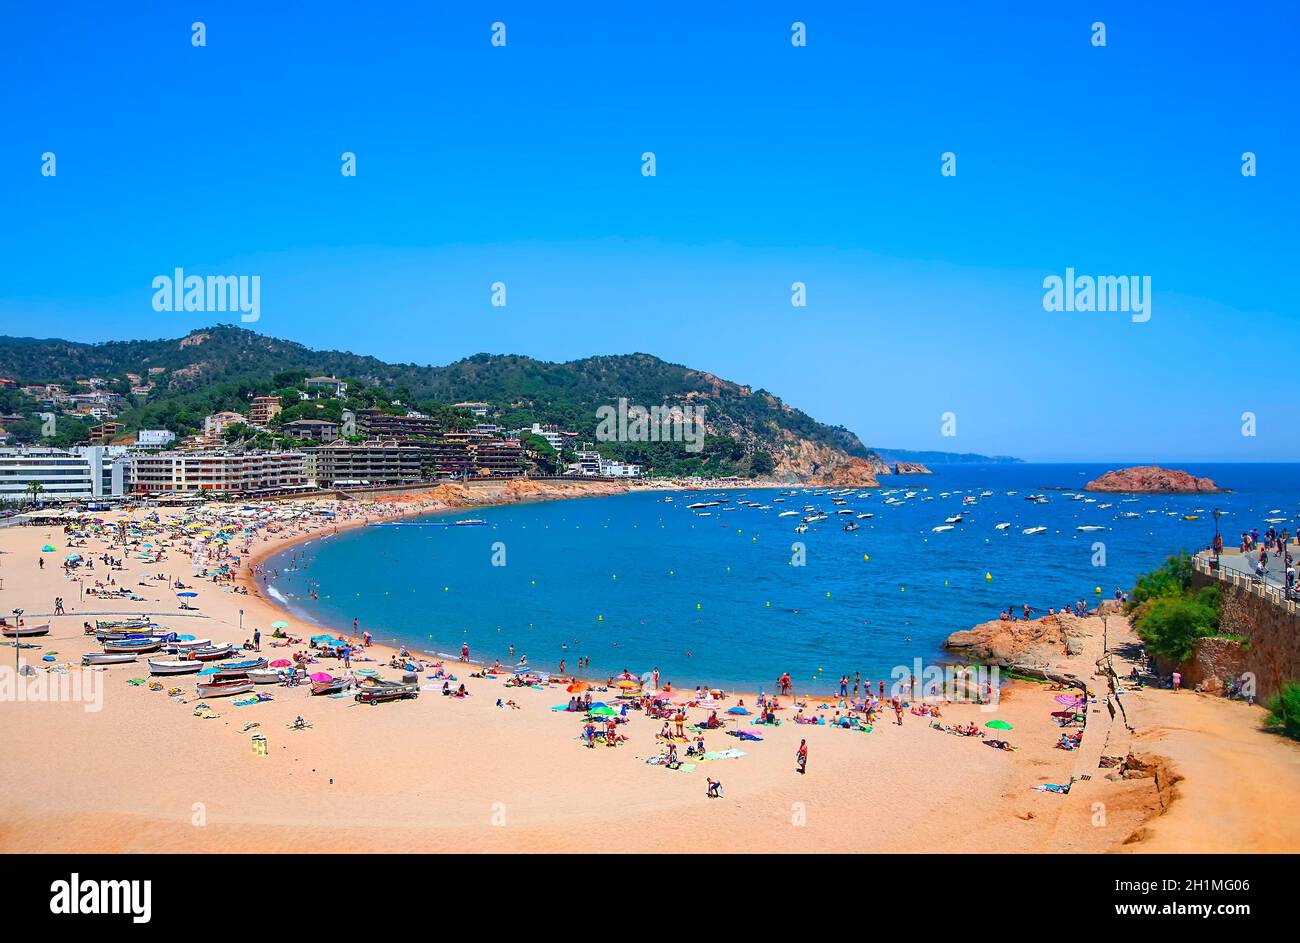 The Panoramic view of beach at Tossa de Mar. Costa Brava, Catalonia, Spain Stock Photo